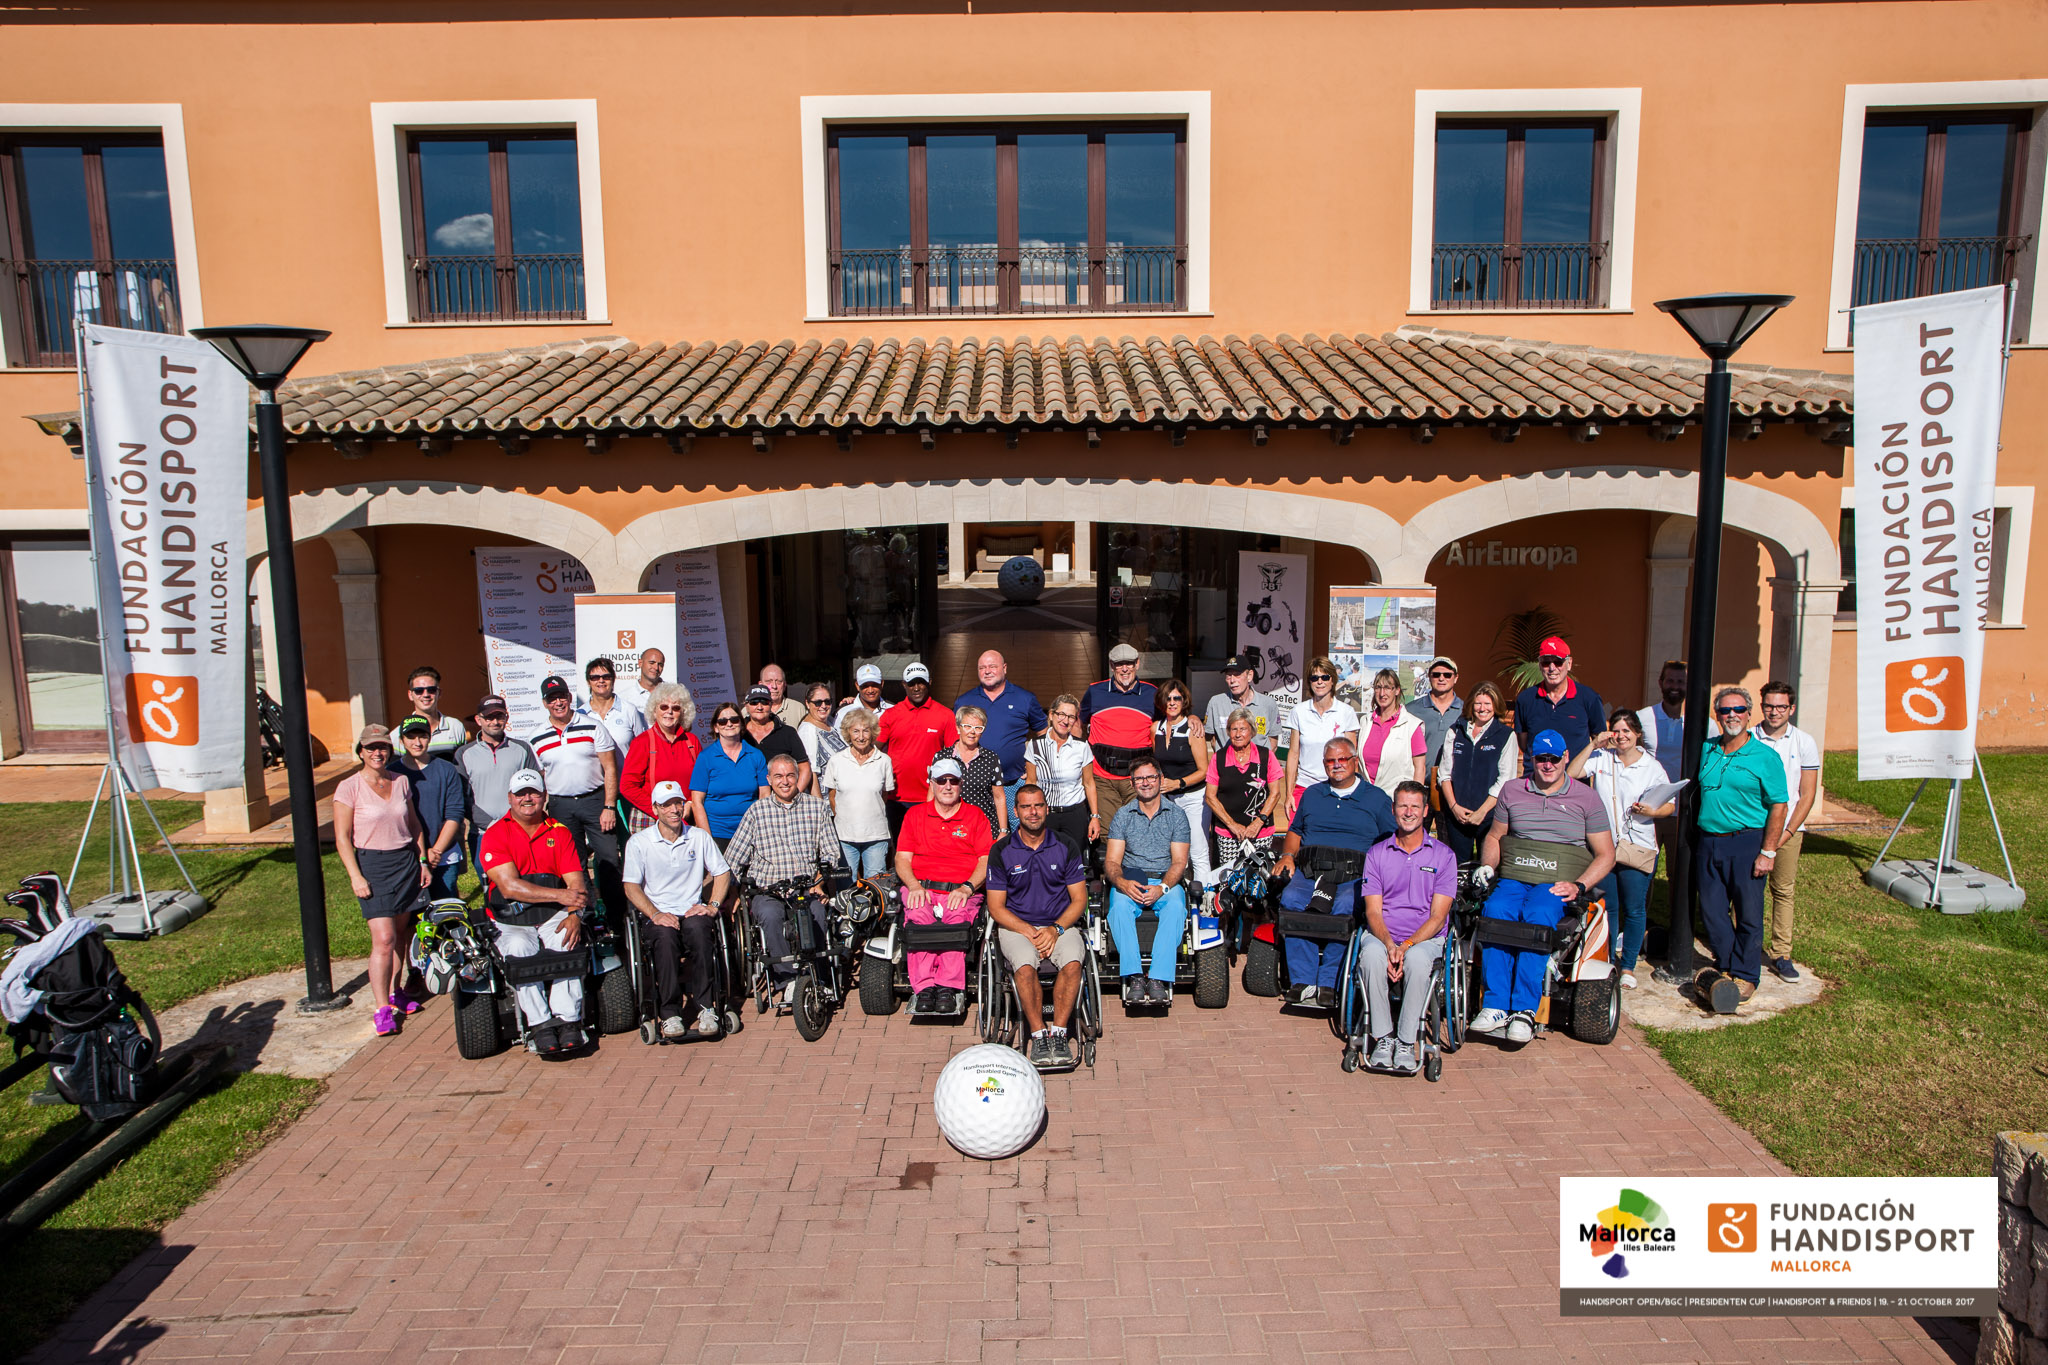 PBT supports BGC / Handisport Mallorca Open